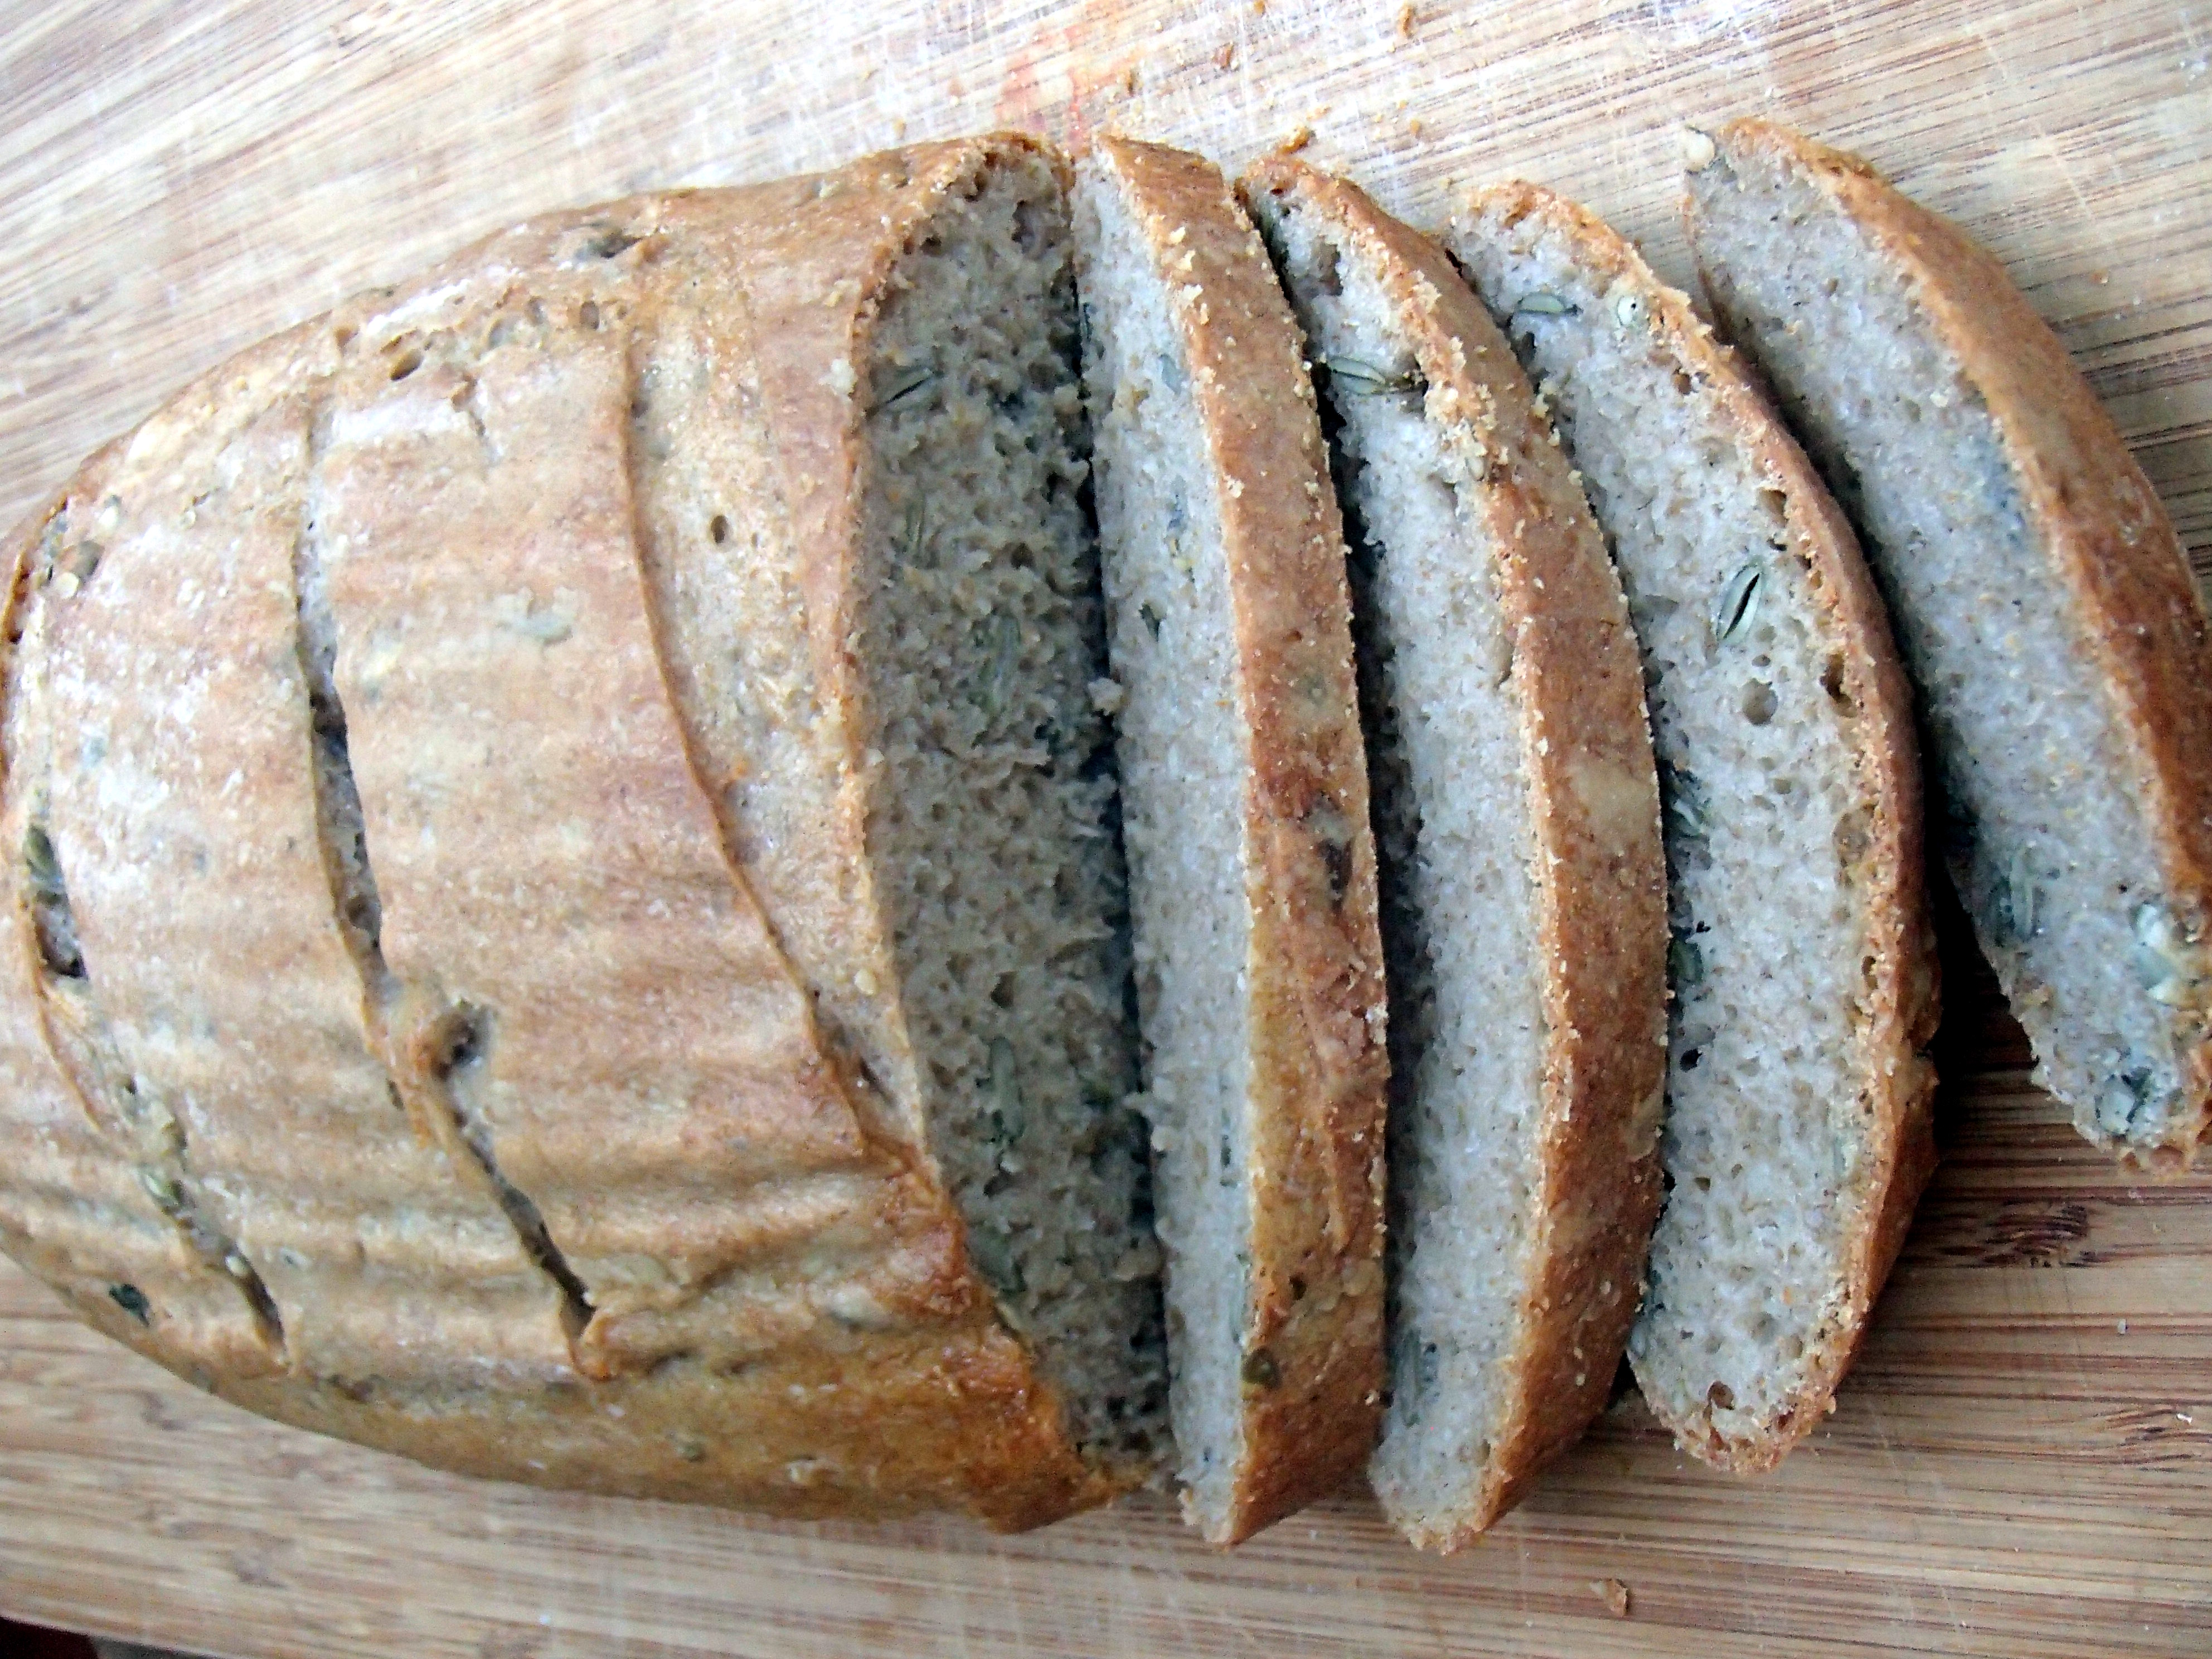 Bread baking – part 1